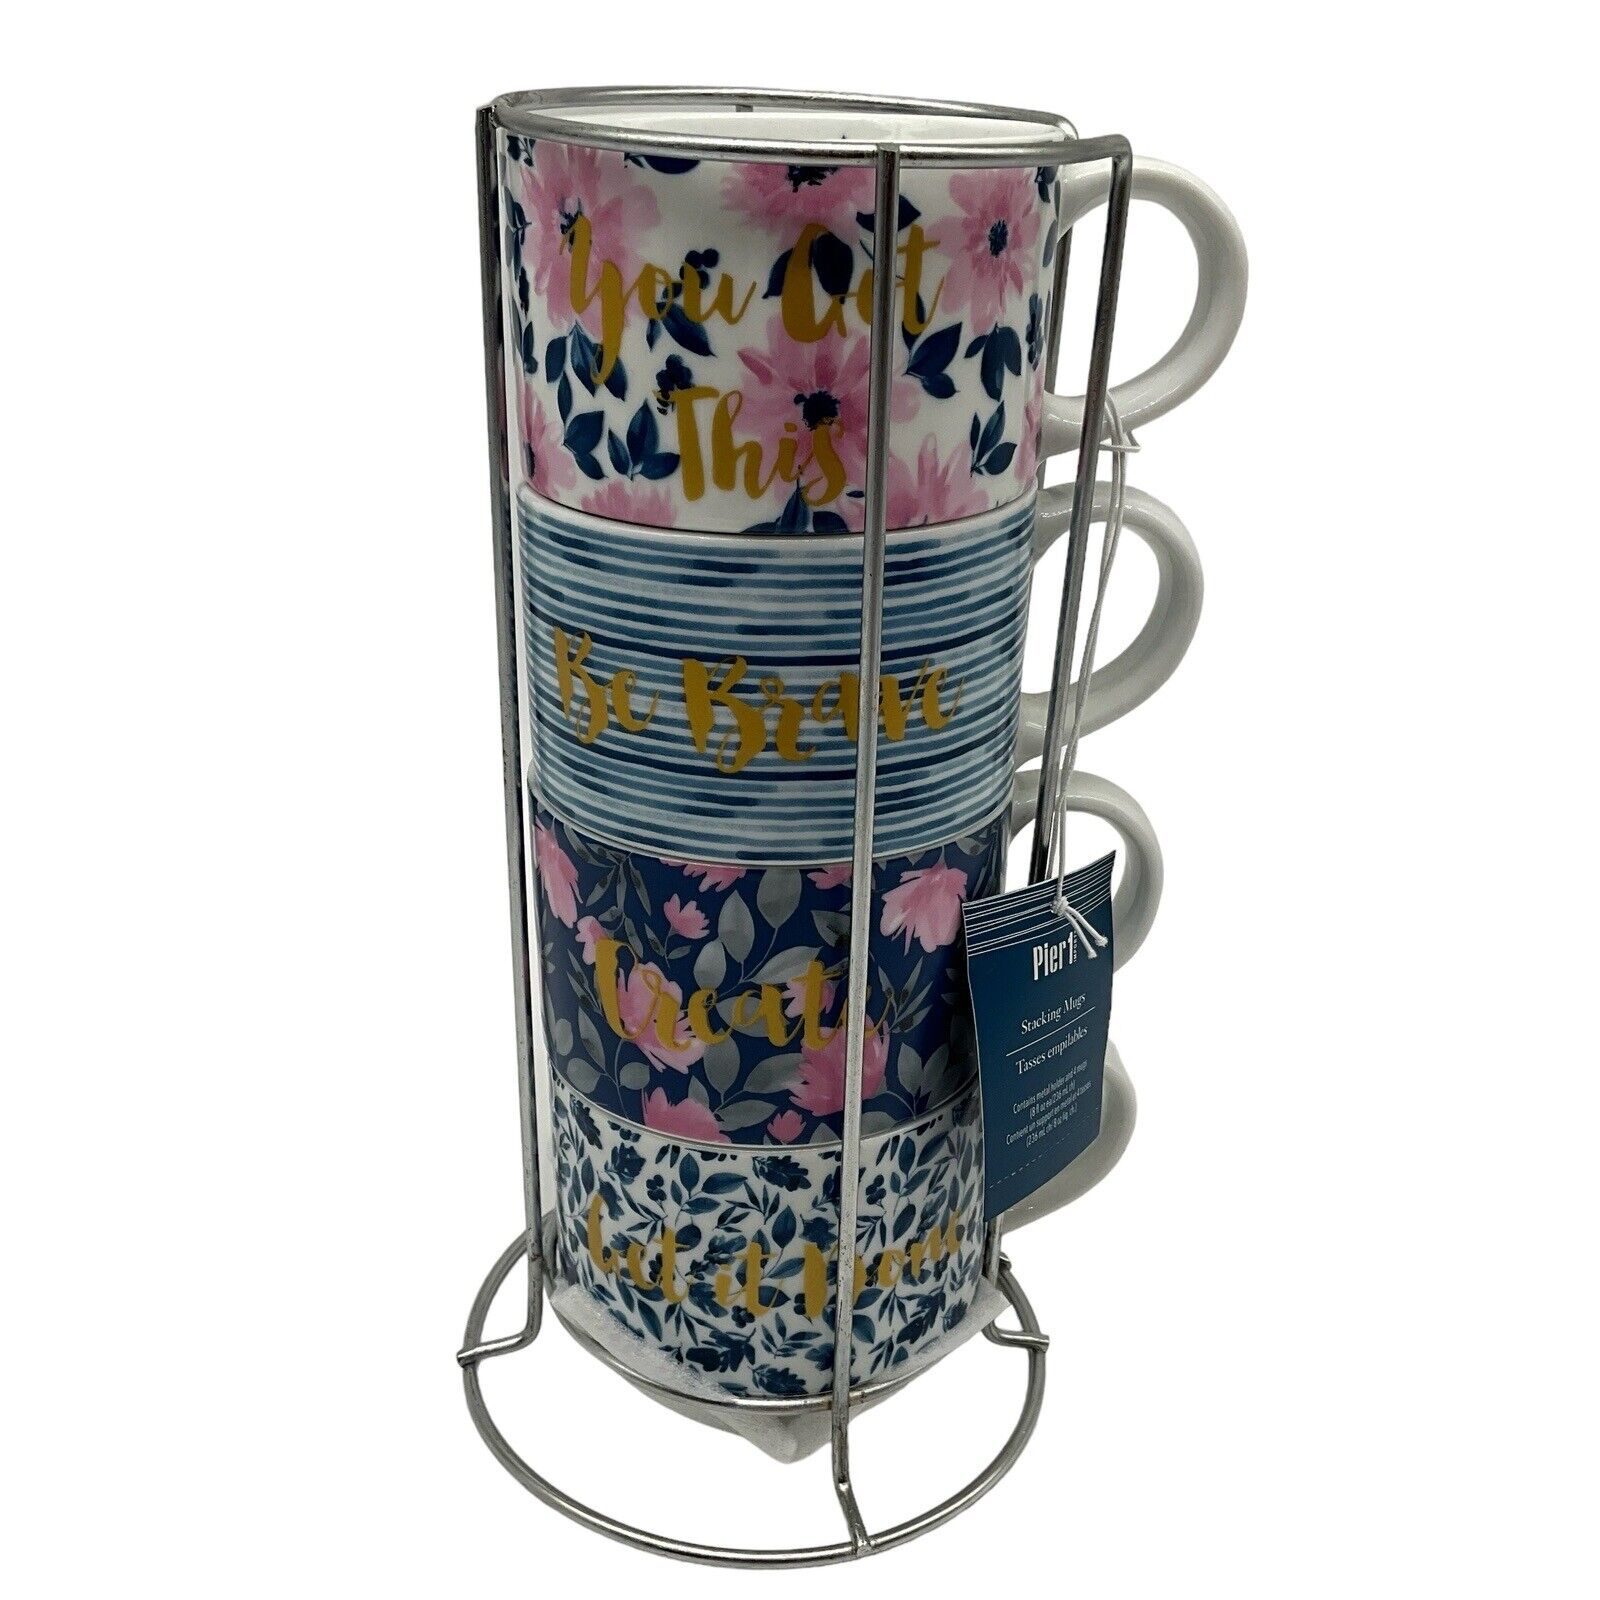 NEW Pier 1 Bright Floral Sentiment Inspirational Mug Set Coffee/Tea coffee Cups